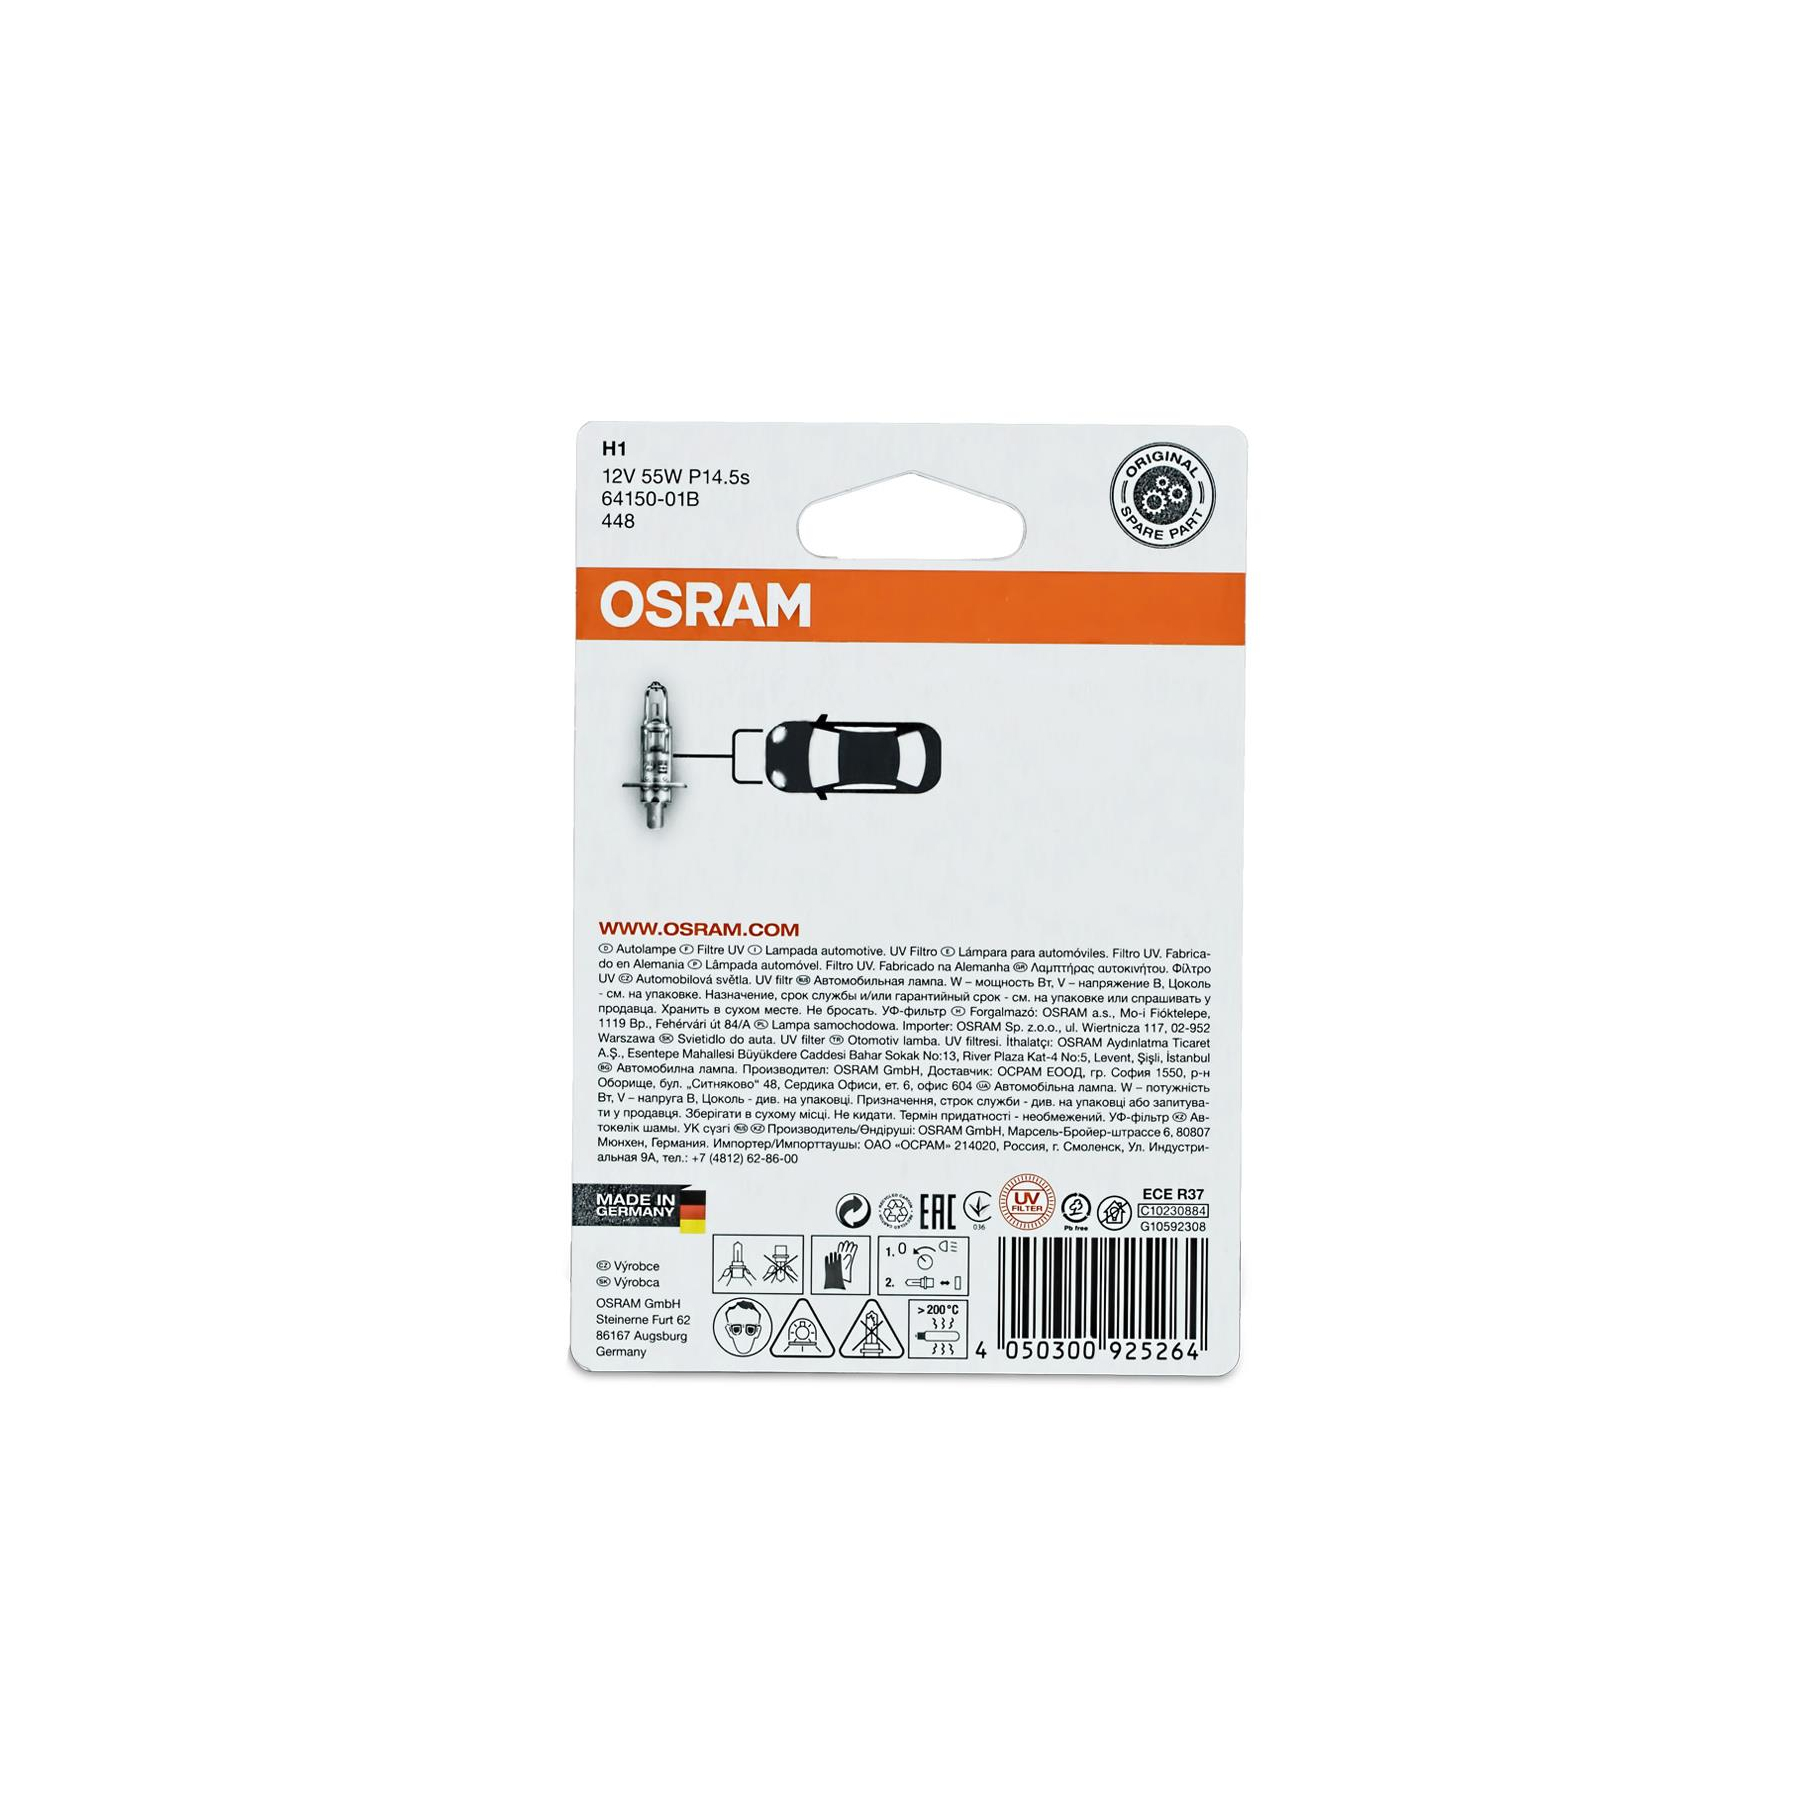 Osram Original Line 12V H1 64150-01B car lamps 1 pc. blister, 6,99 €